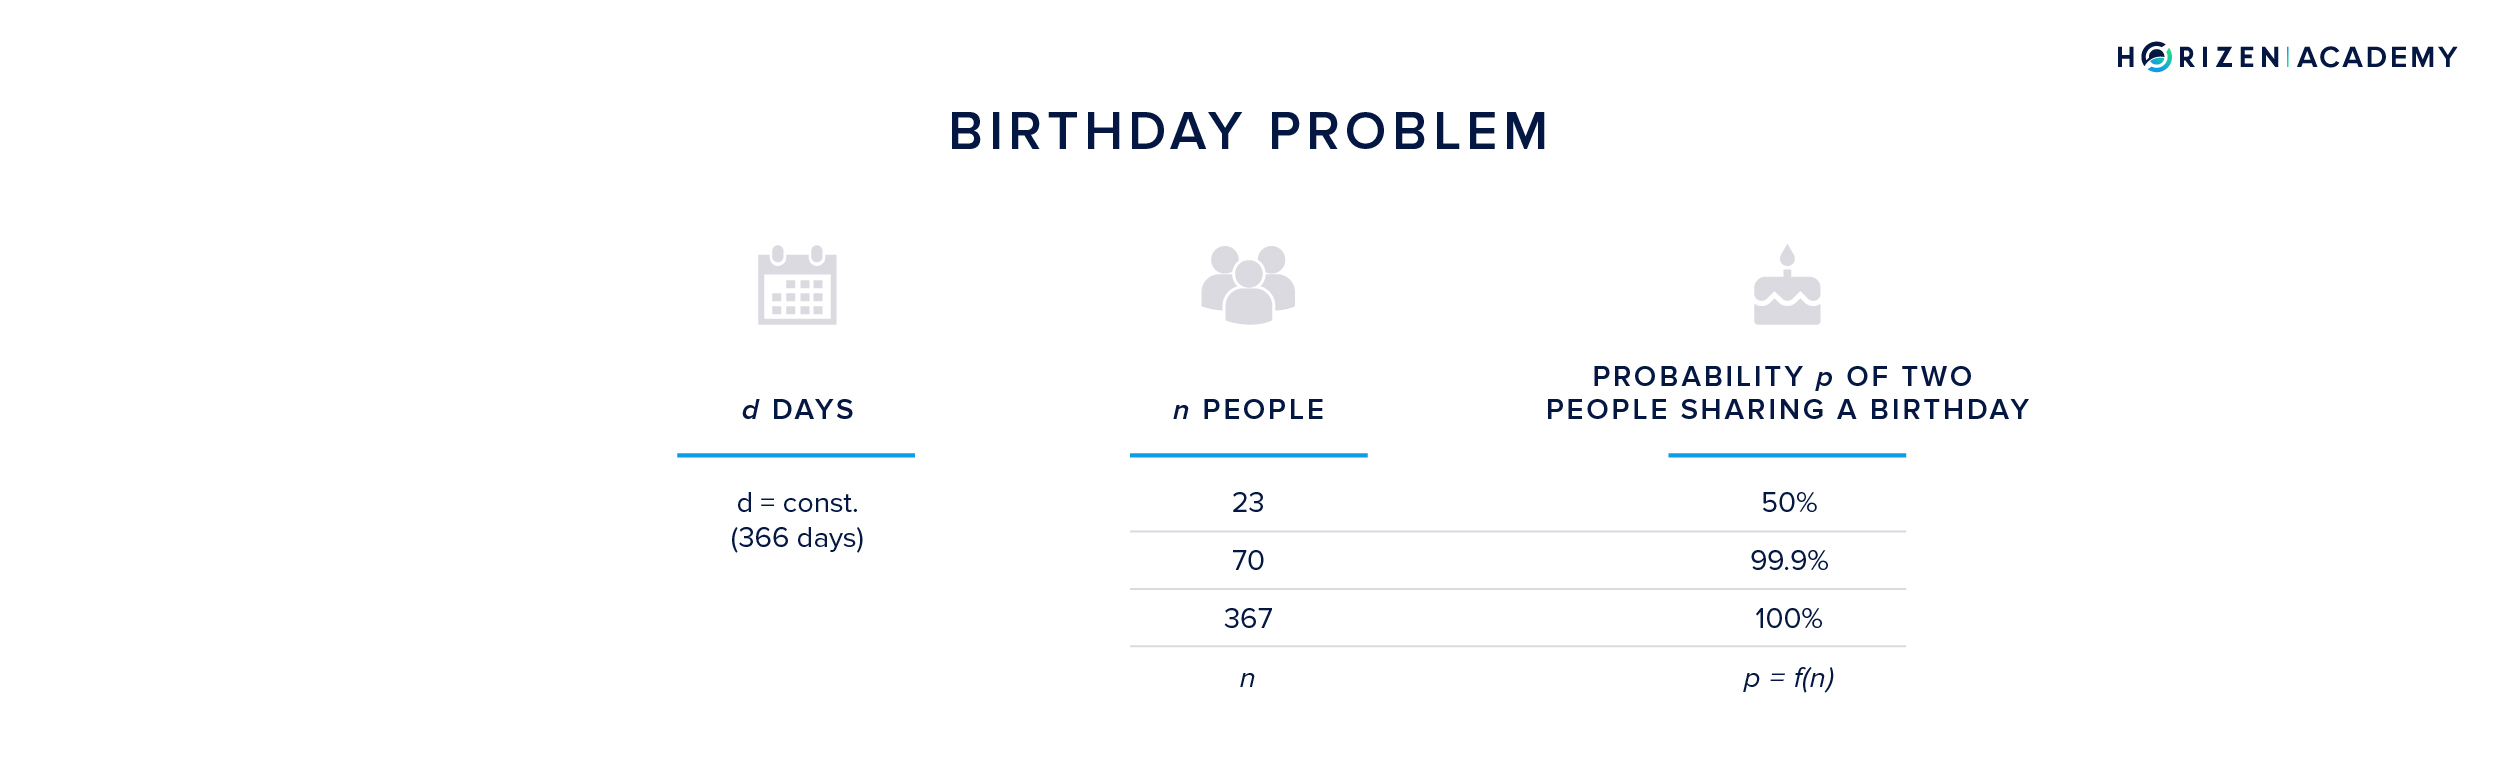 The Birthday Problem